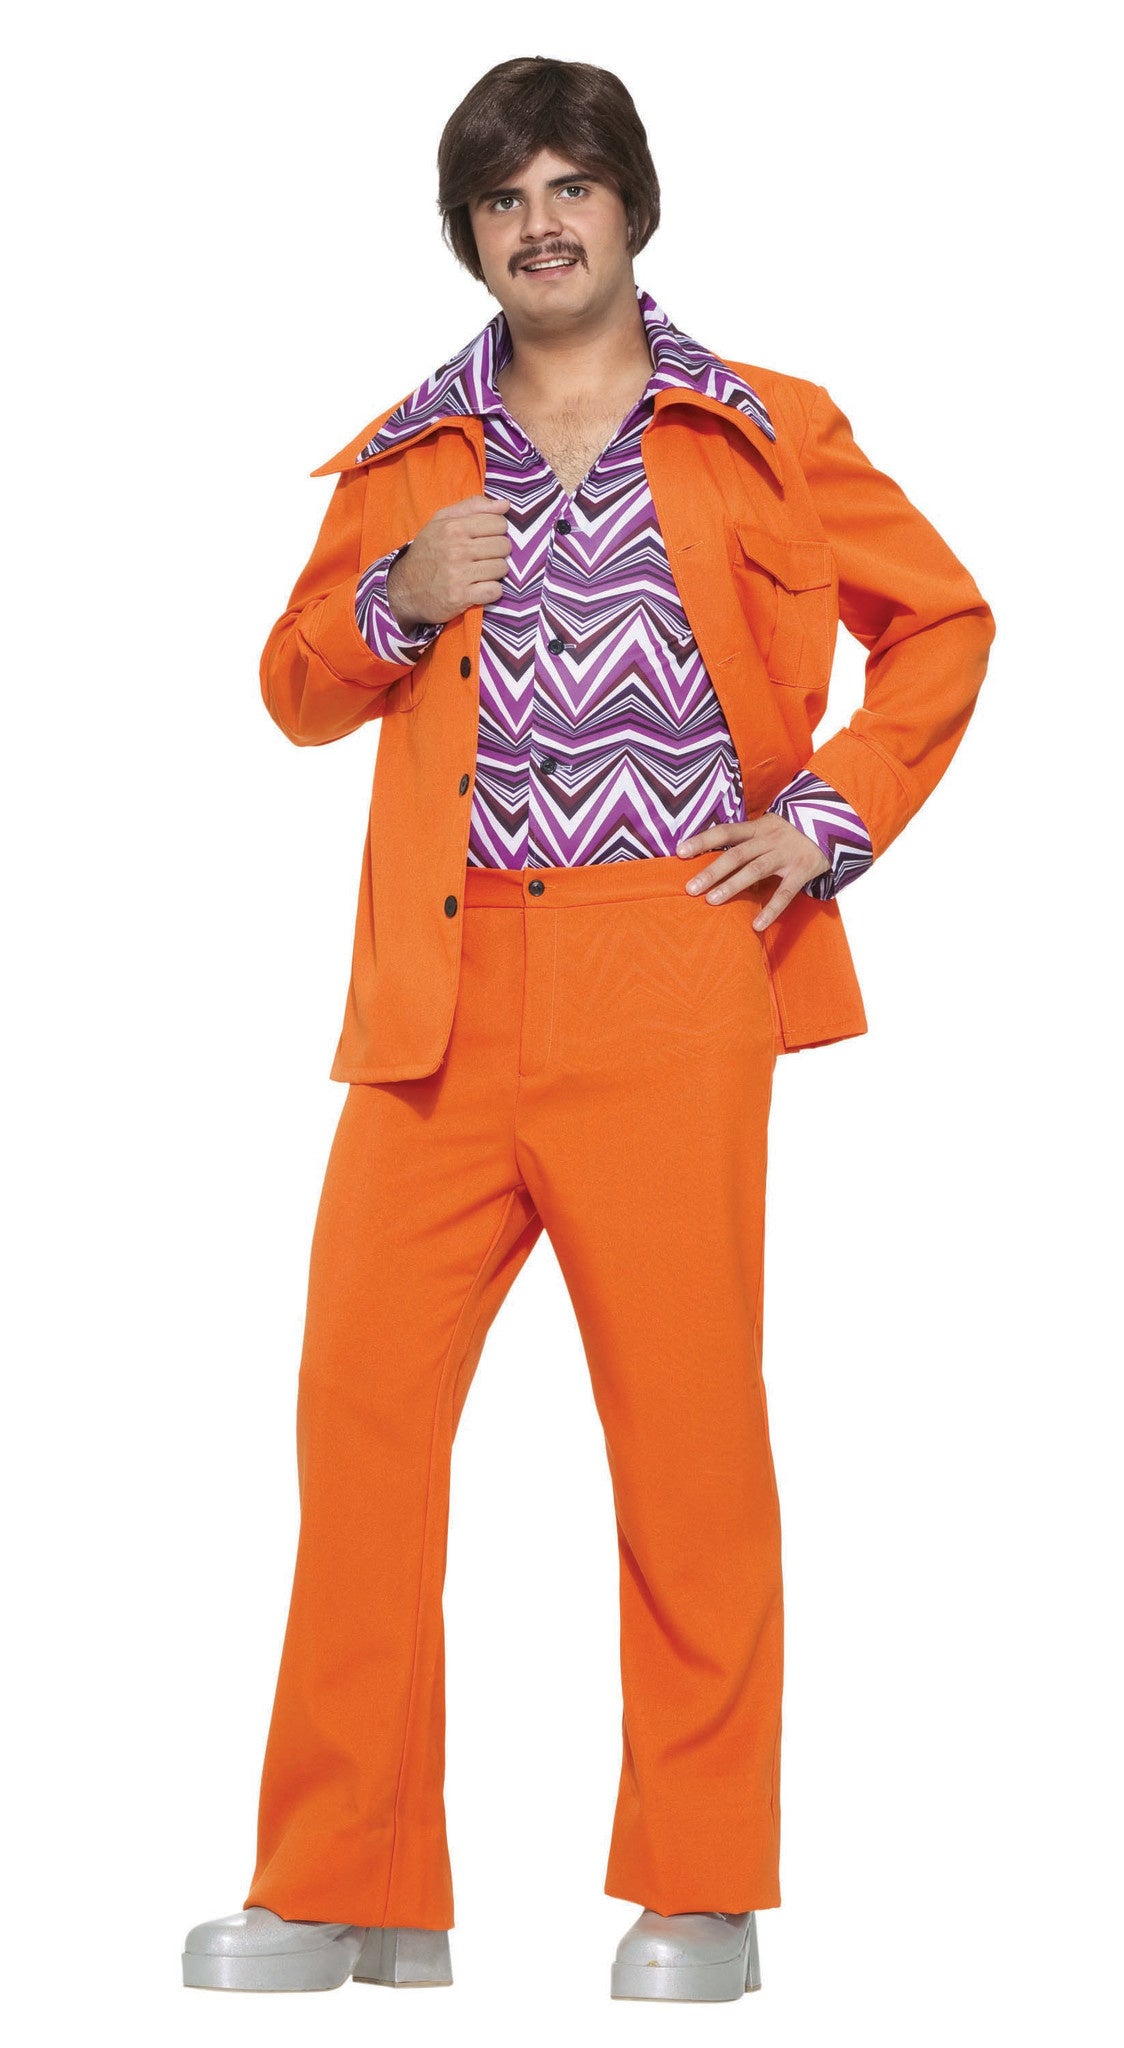 Men's 70's Leisure Suit: Orange - Standard